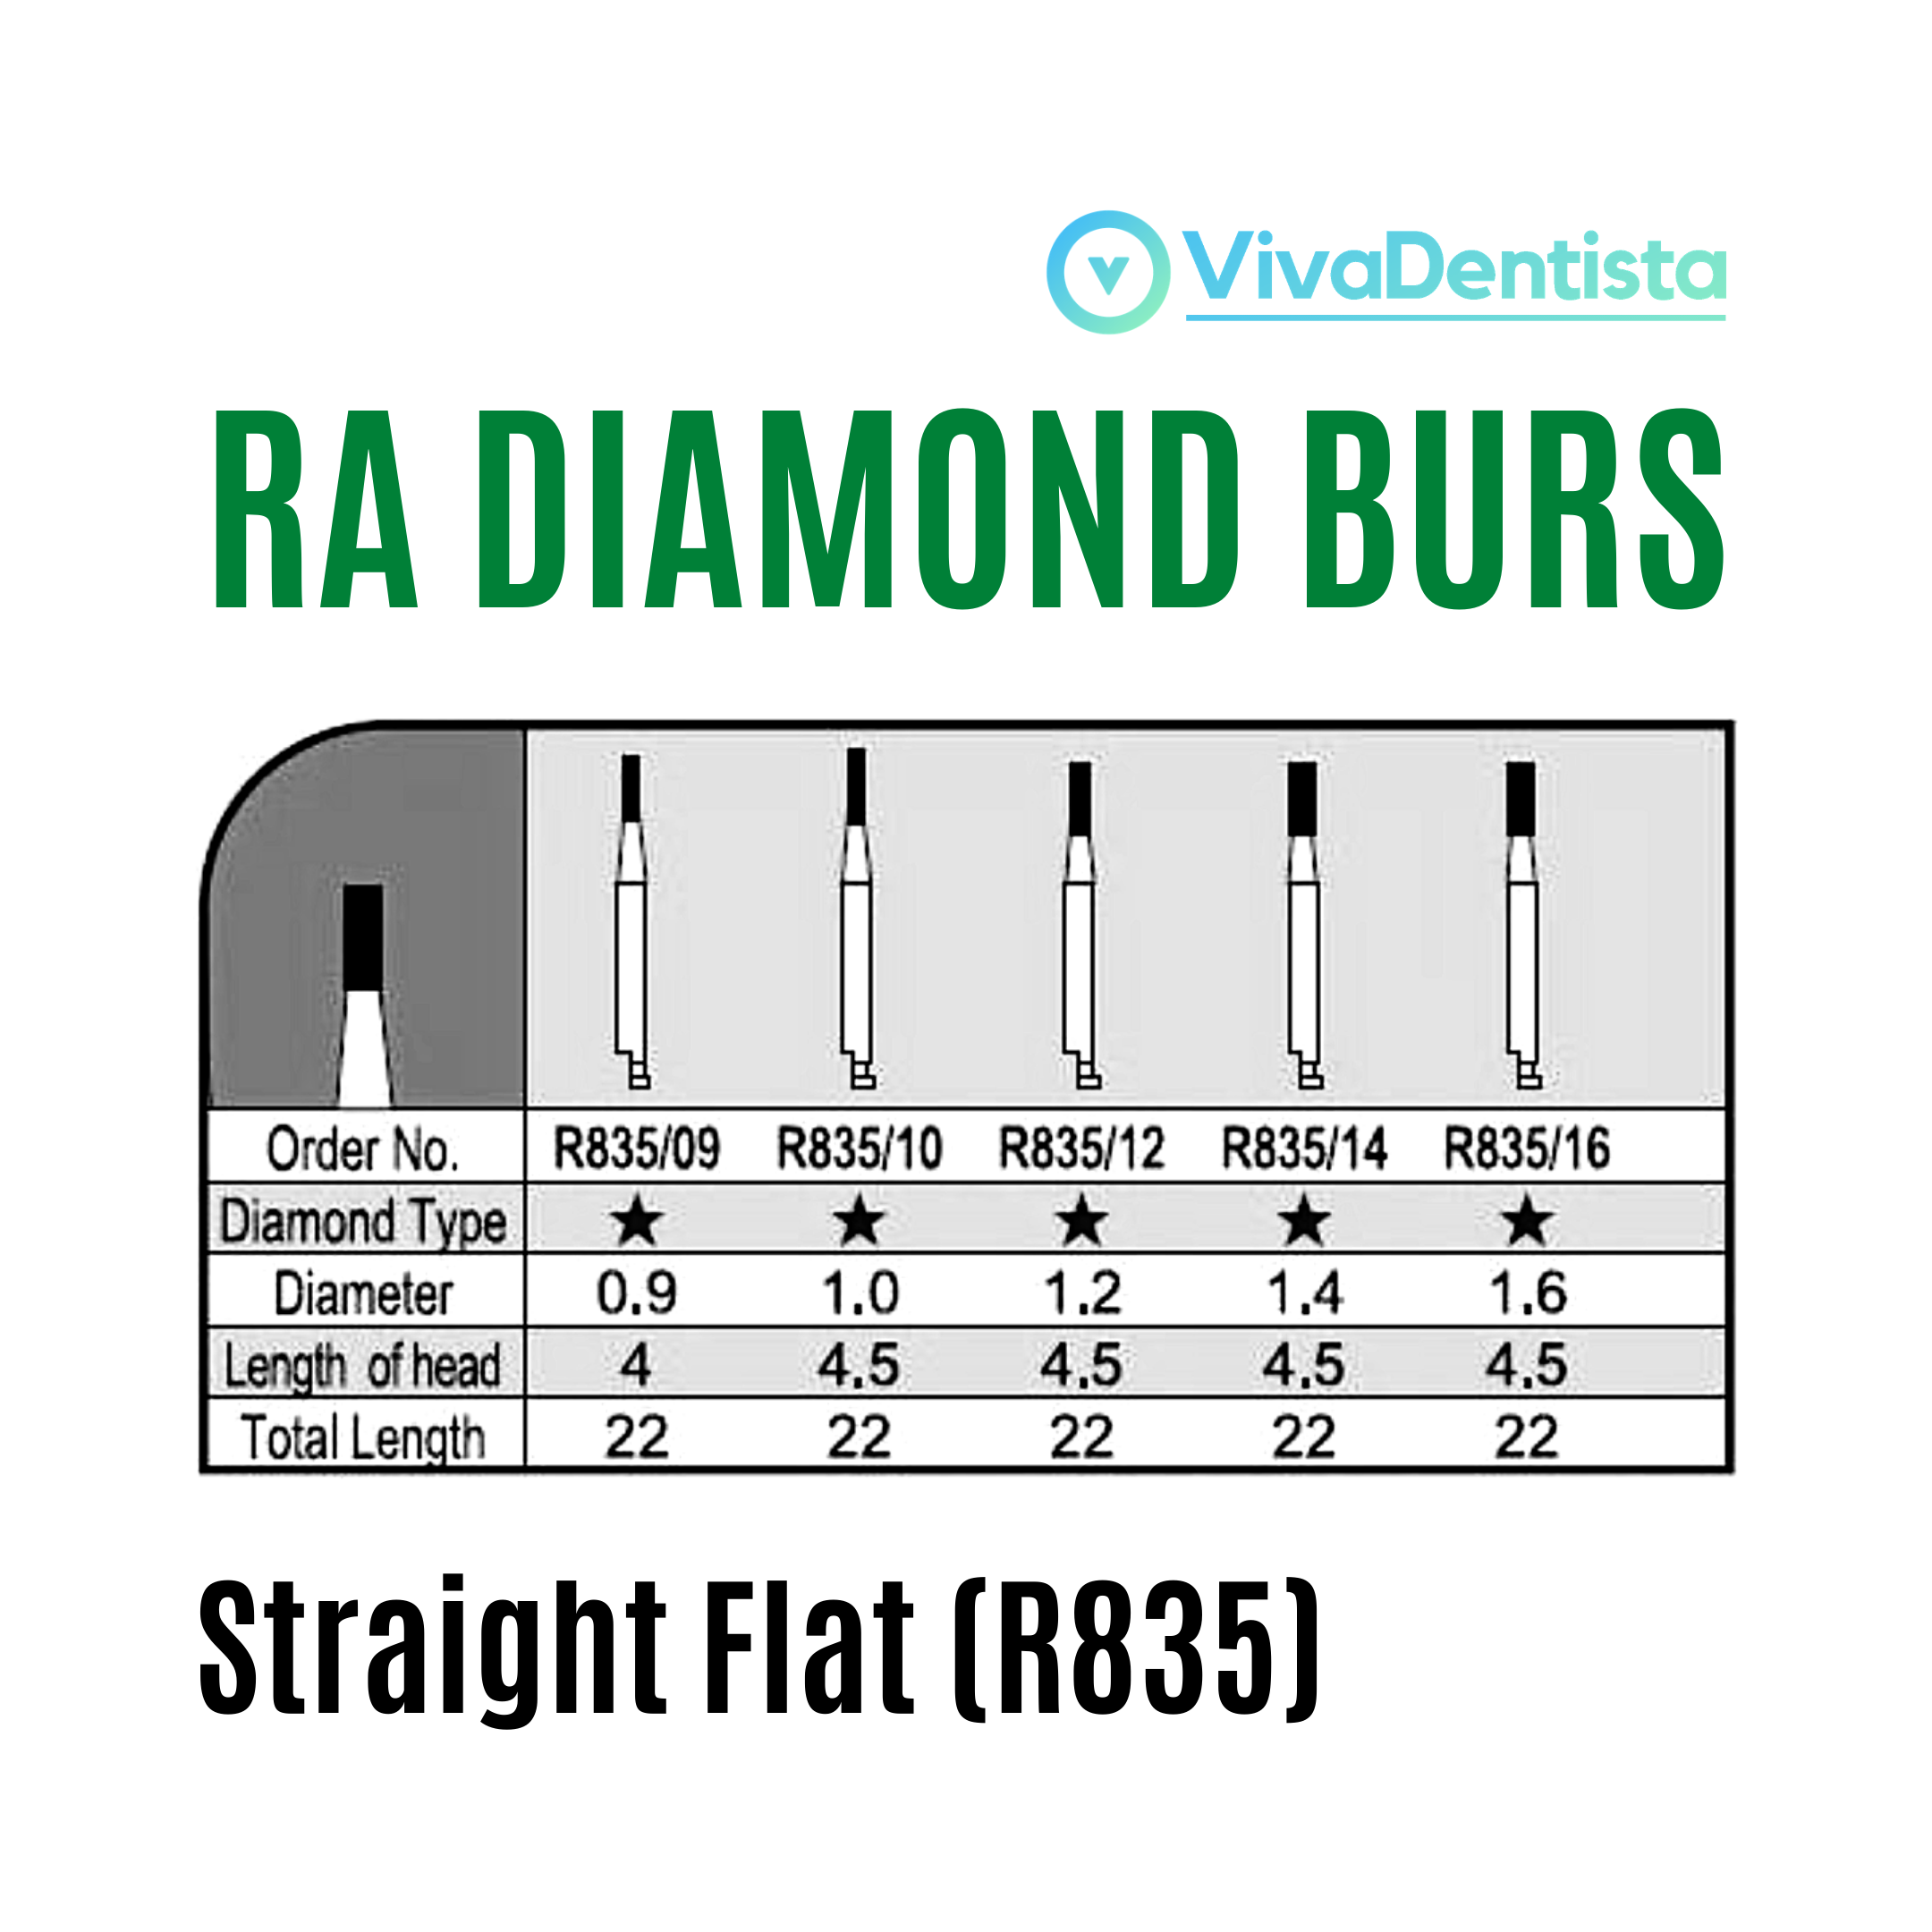 RA Diamond Burs (Straight Flat) - 5pcs